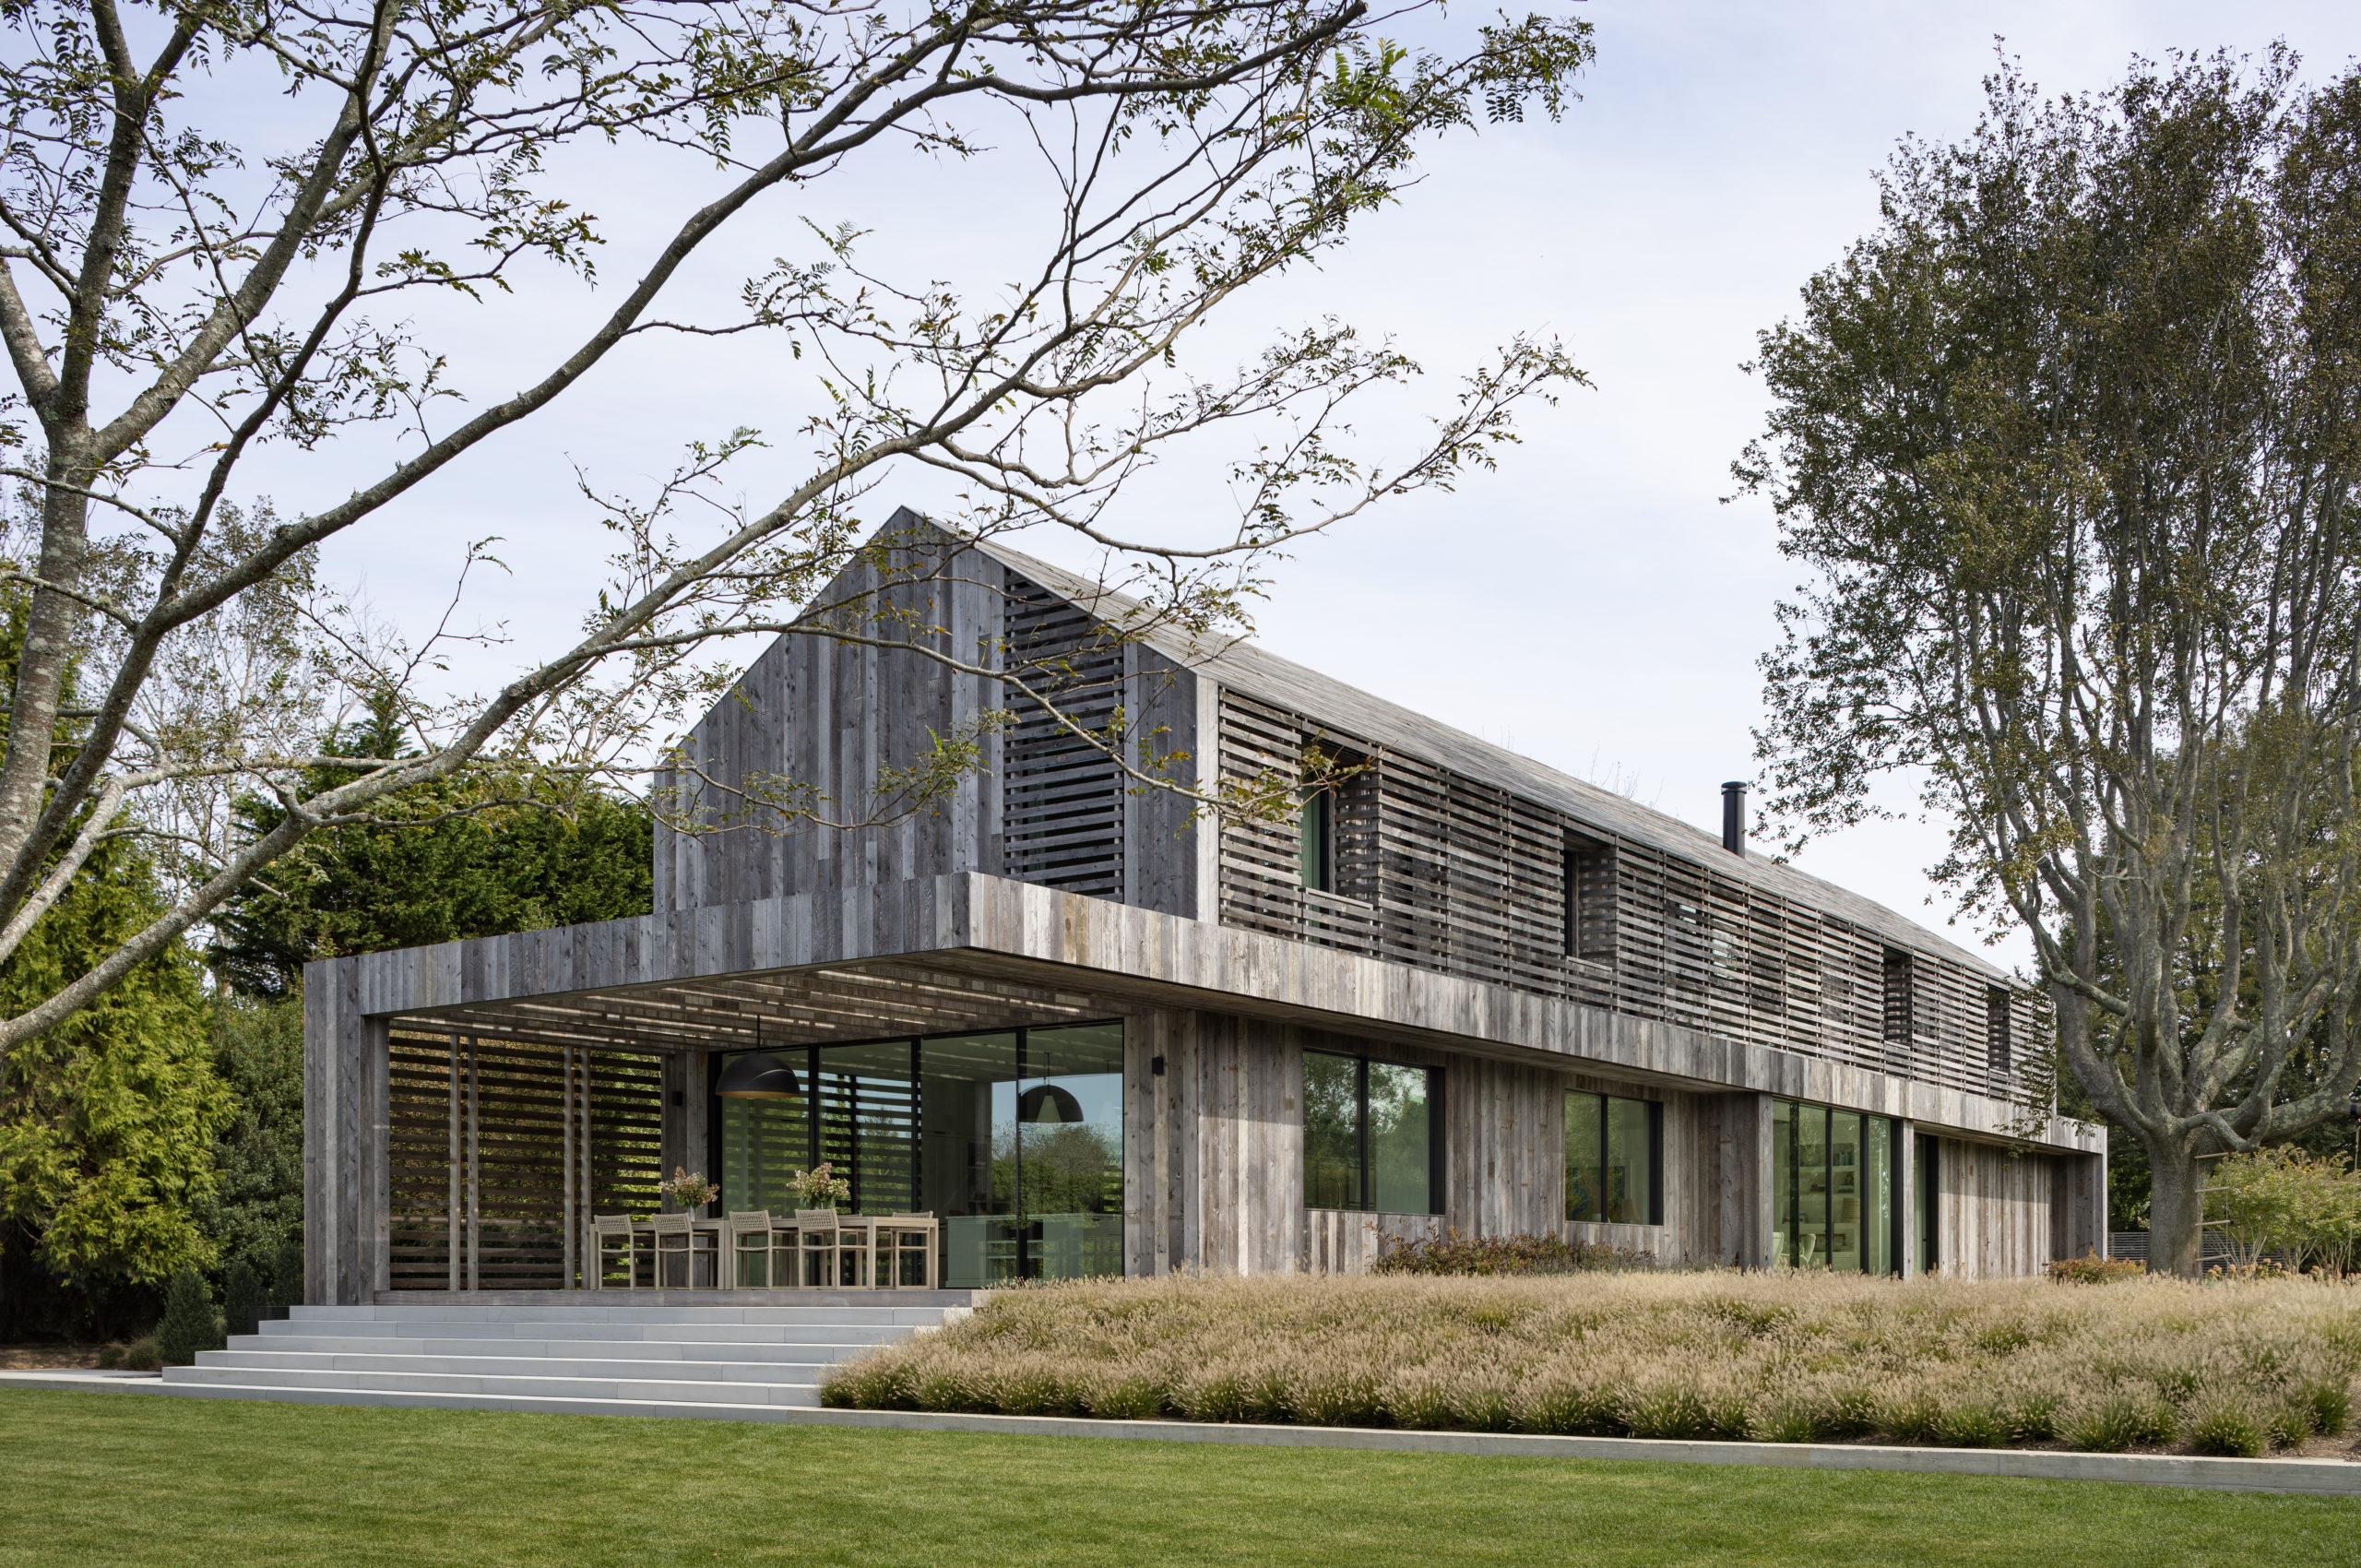 Architectural firm Birdseye in Richmond, Vermont, won a Merit Award for Lathhouse in Sagaponack.